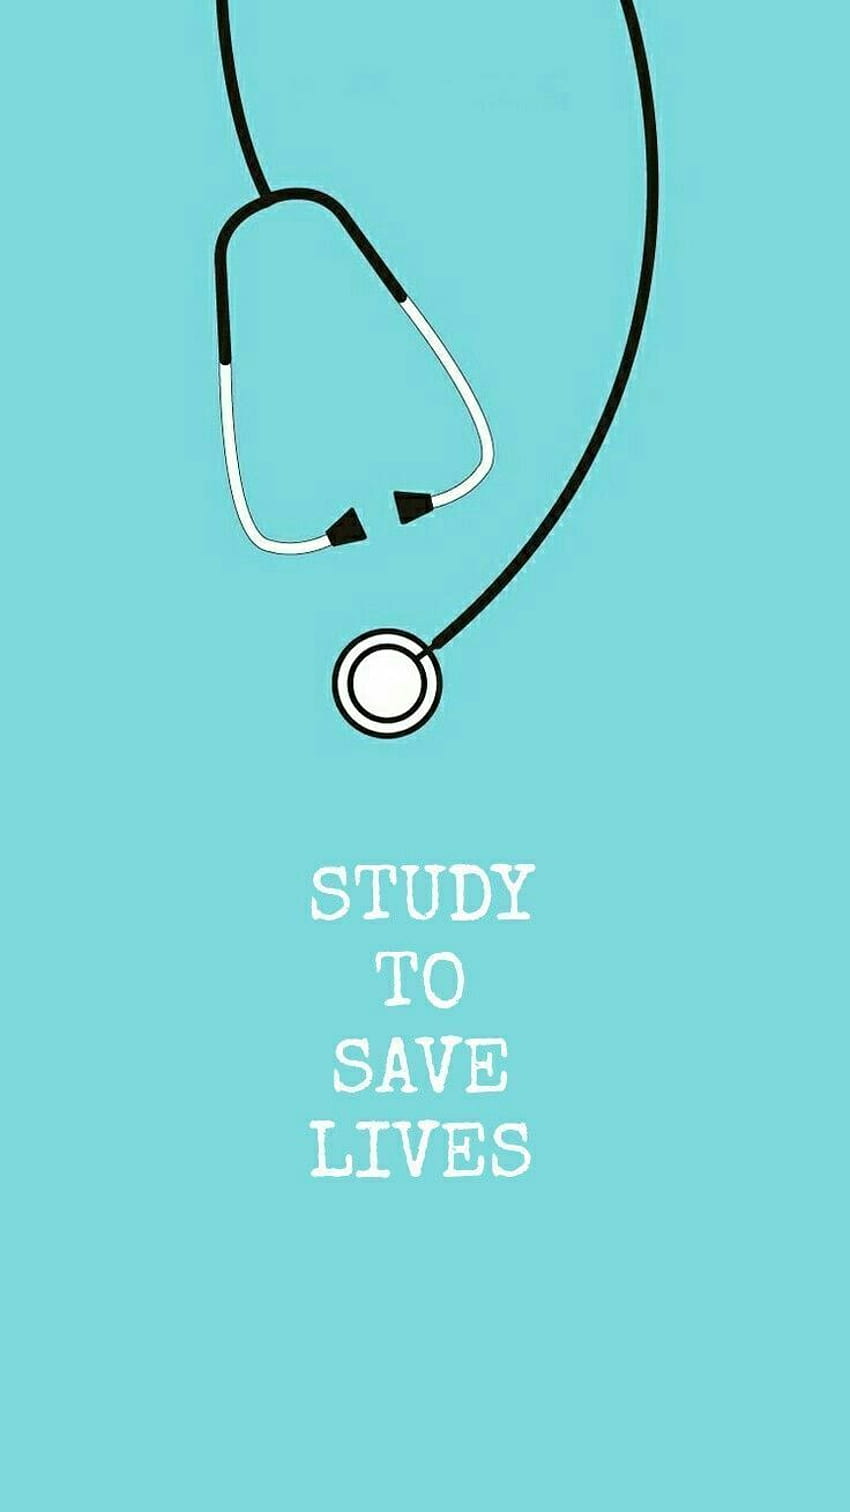 Study to save lives - Nurse